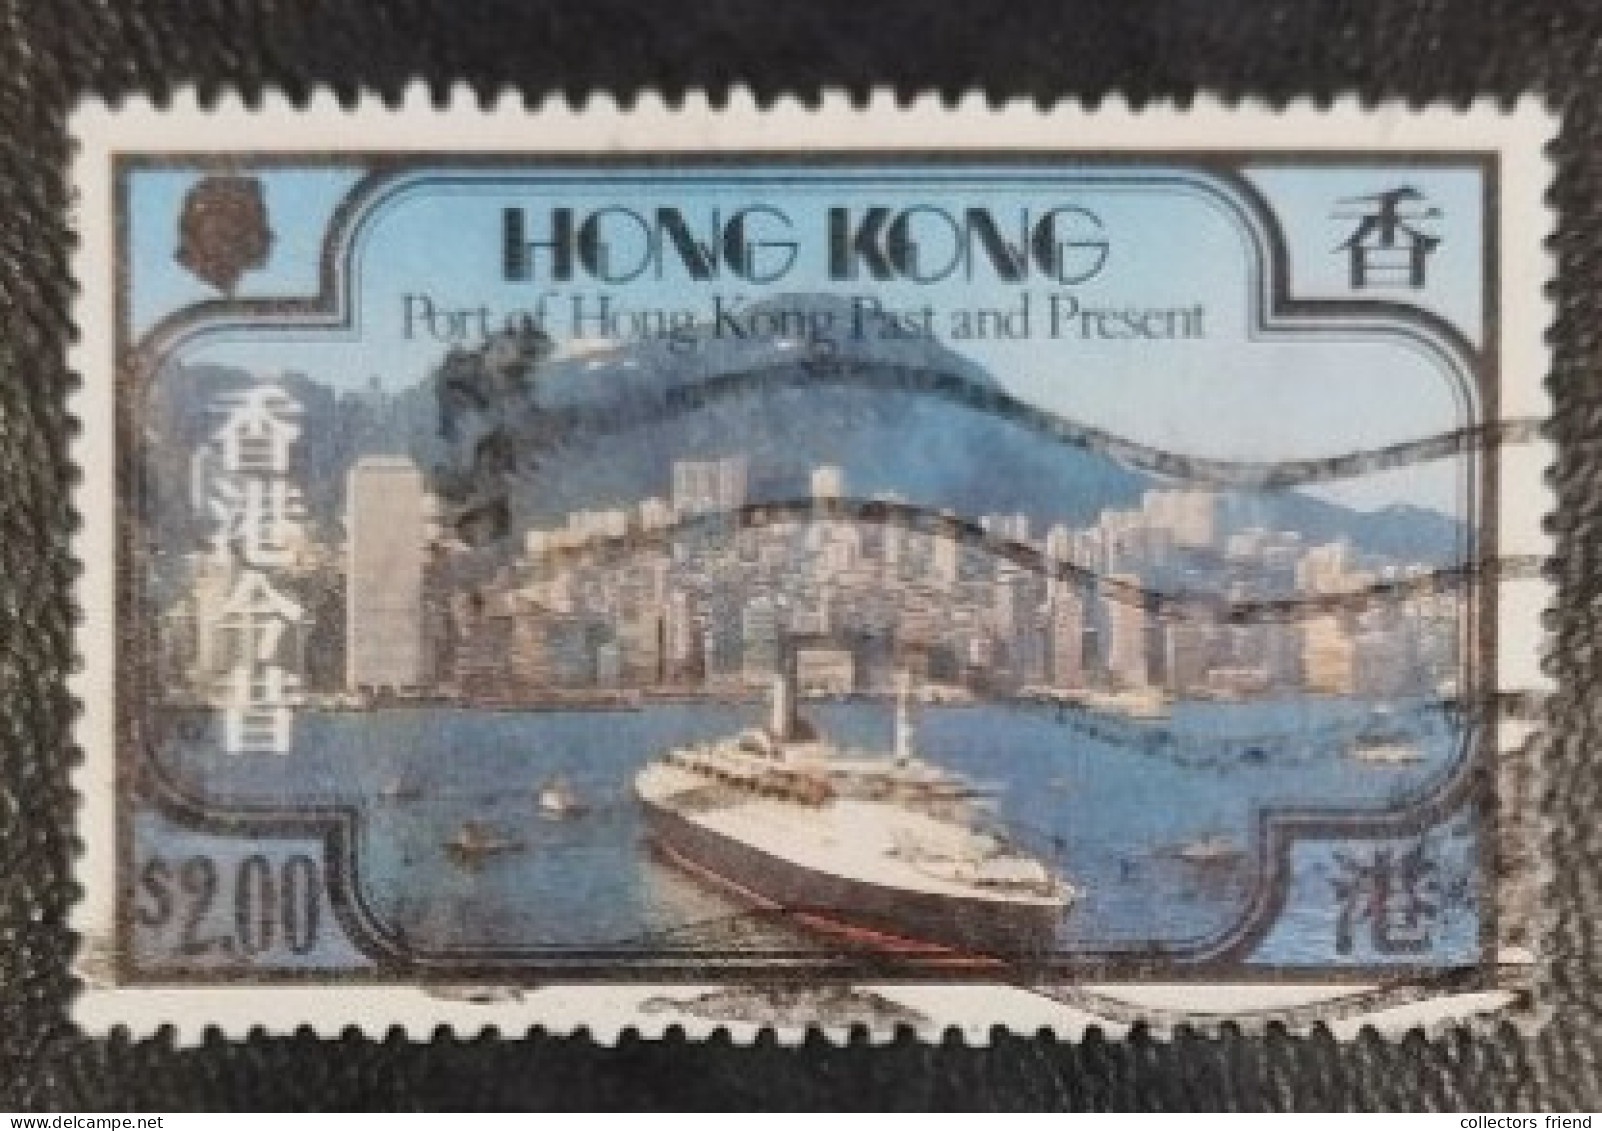 Hong Kong - 1982 - Hong Kong Port, Past And Present - Liner Queen Elizabeth 2 - Used - Oblitérés